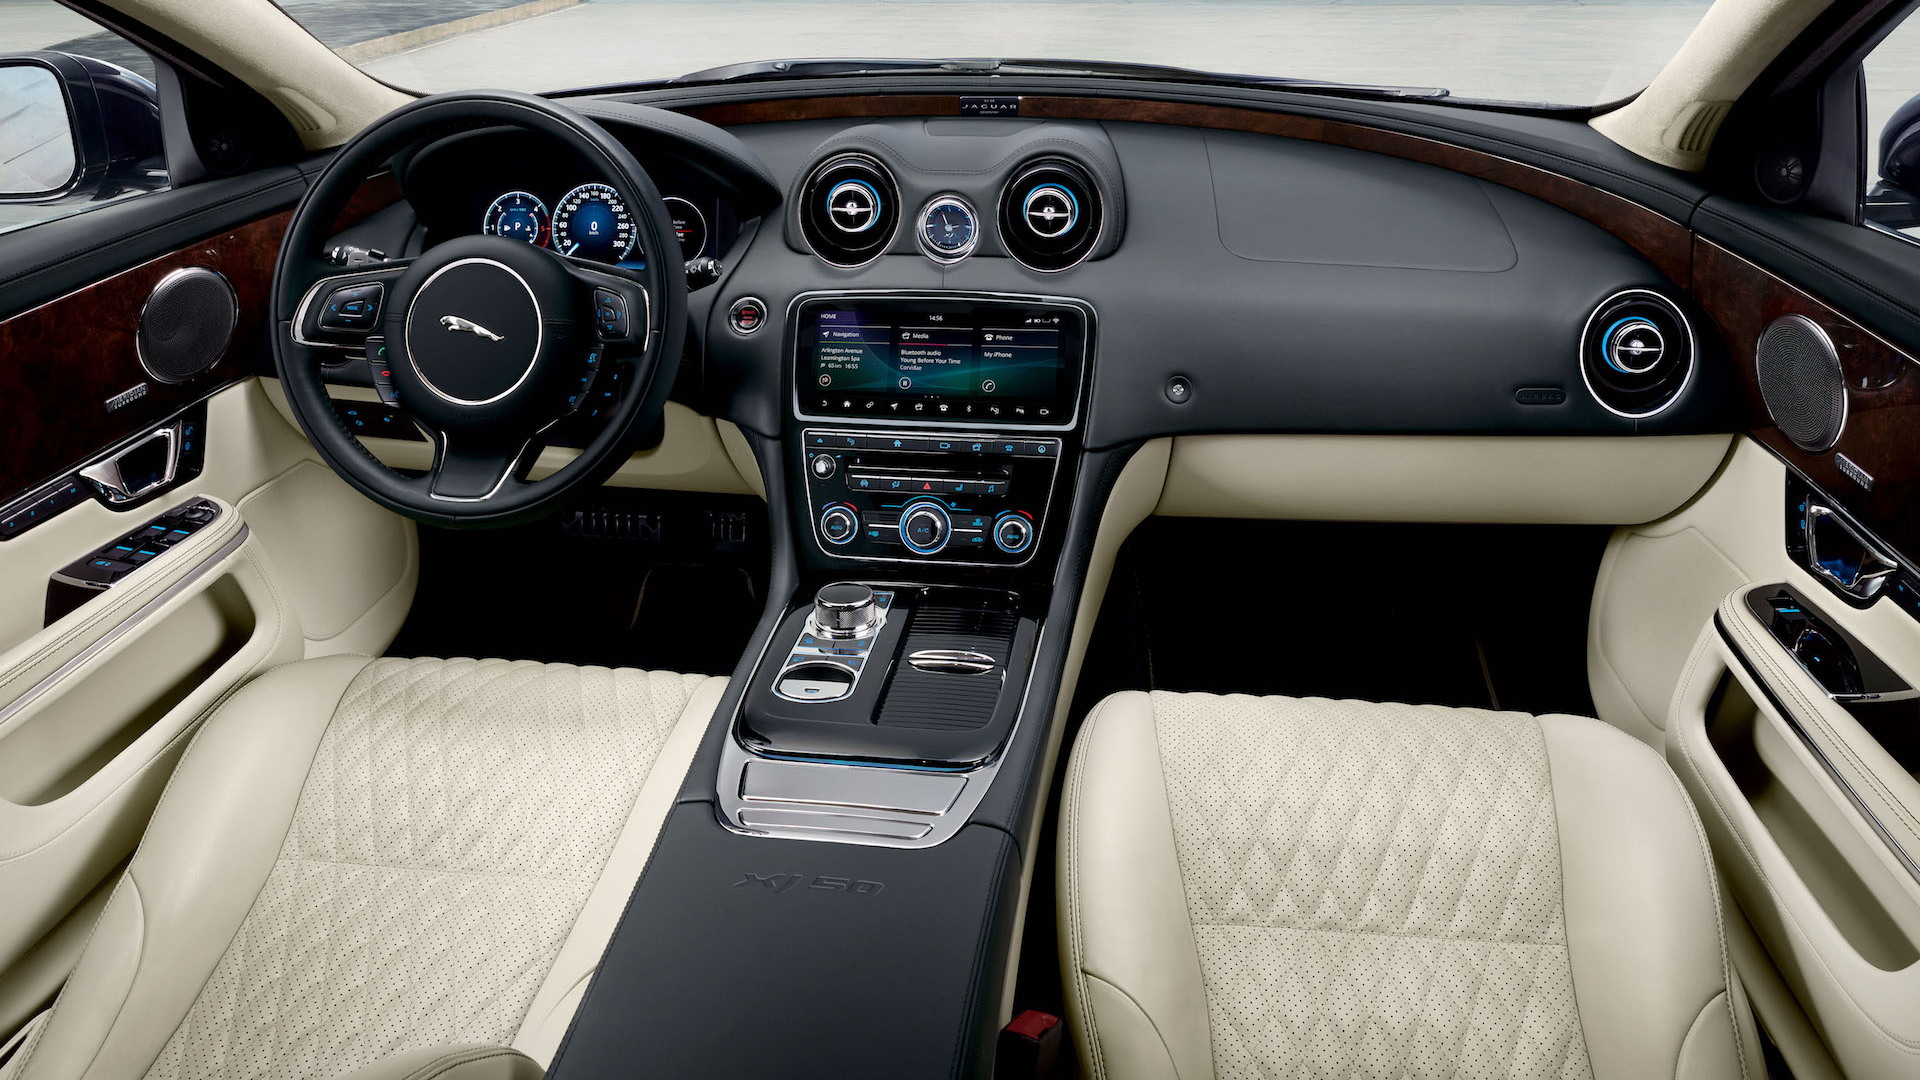 Jaguar XJ50 special edition marks model's 50th anniversary